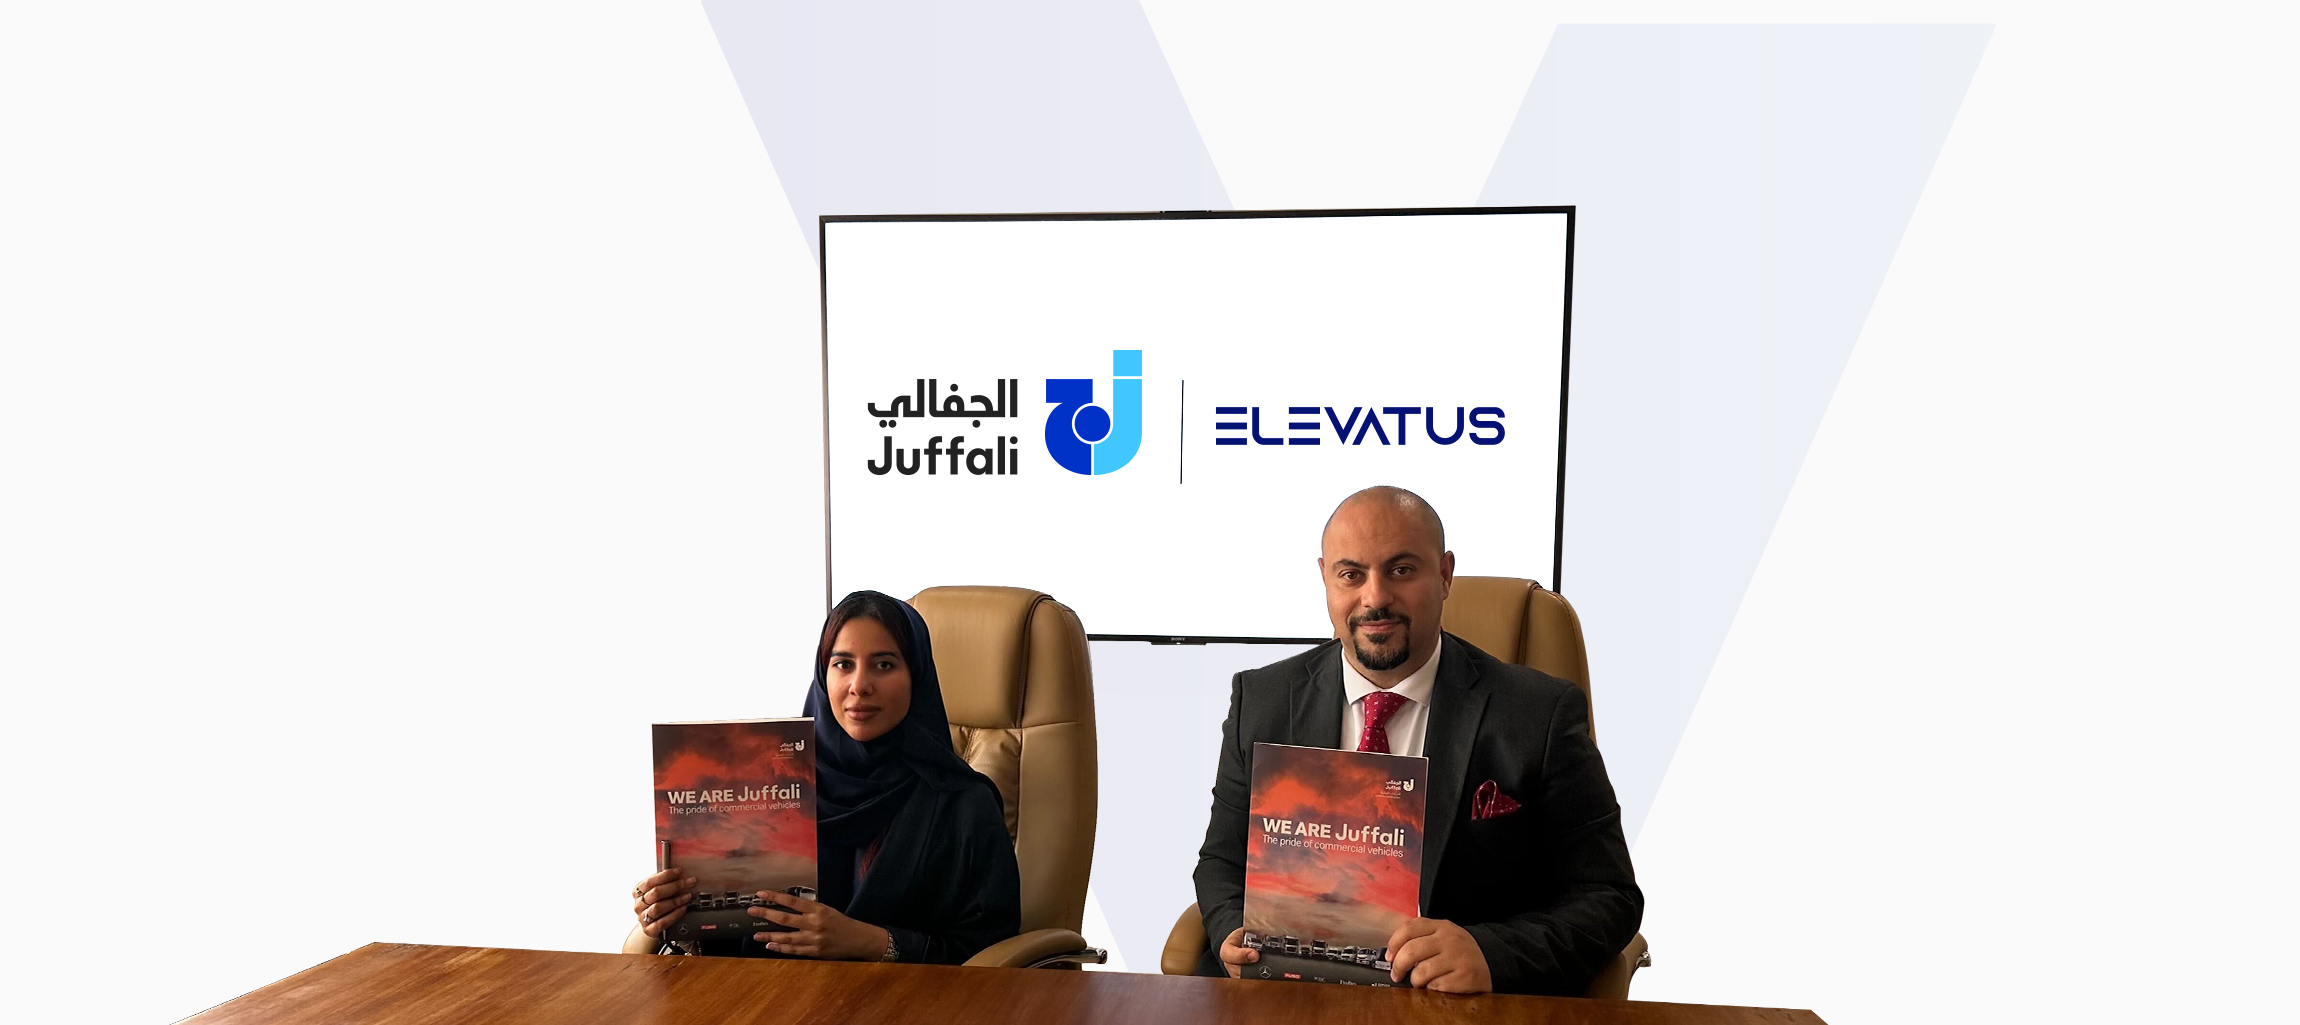 Elevatus partners with Juffali